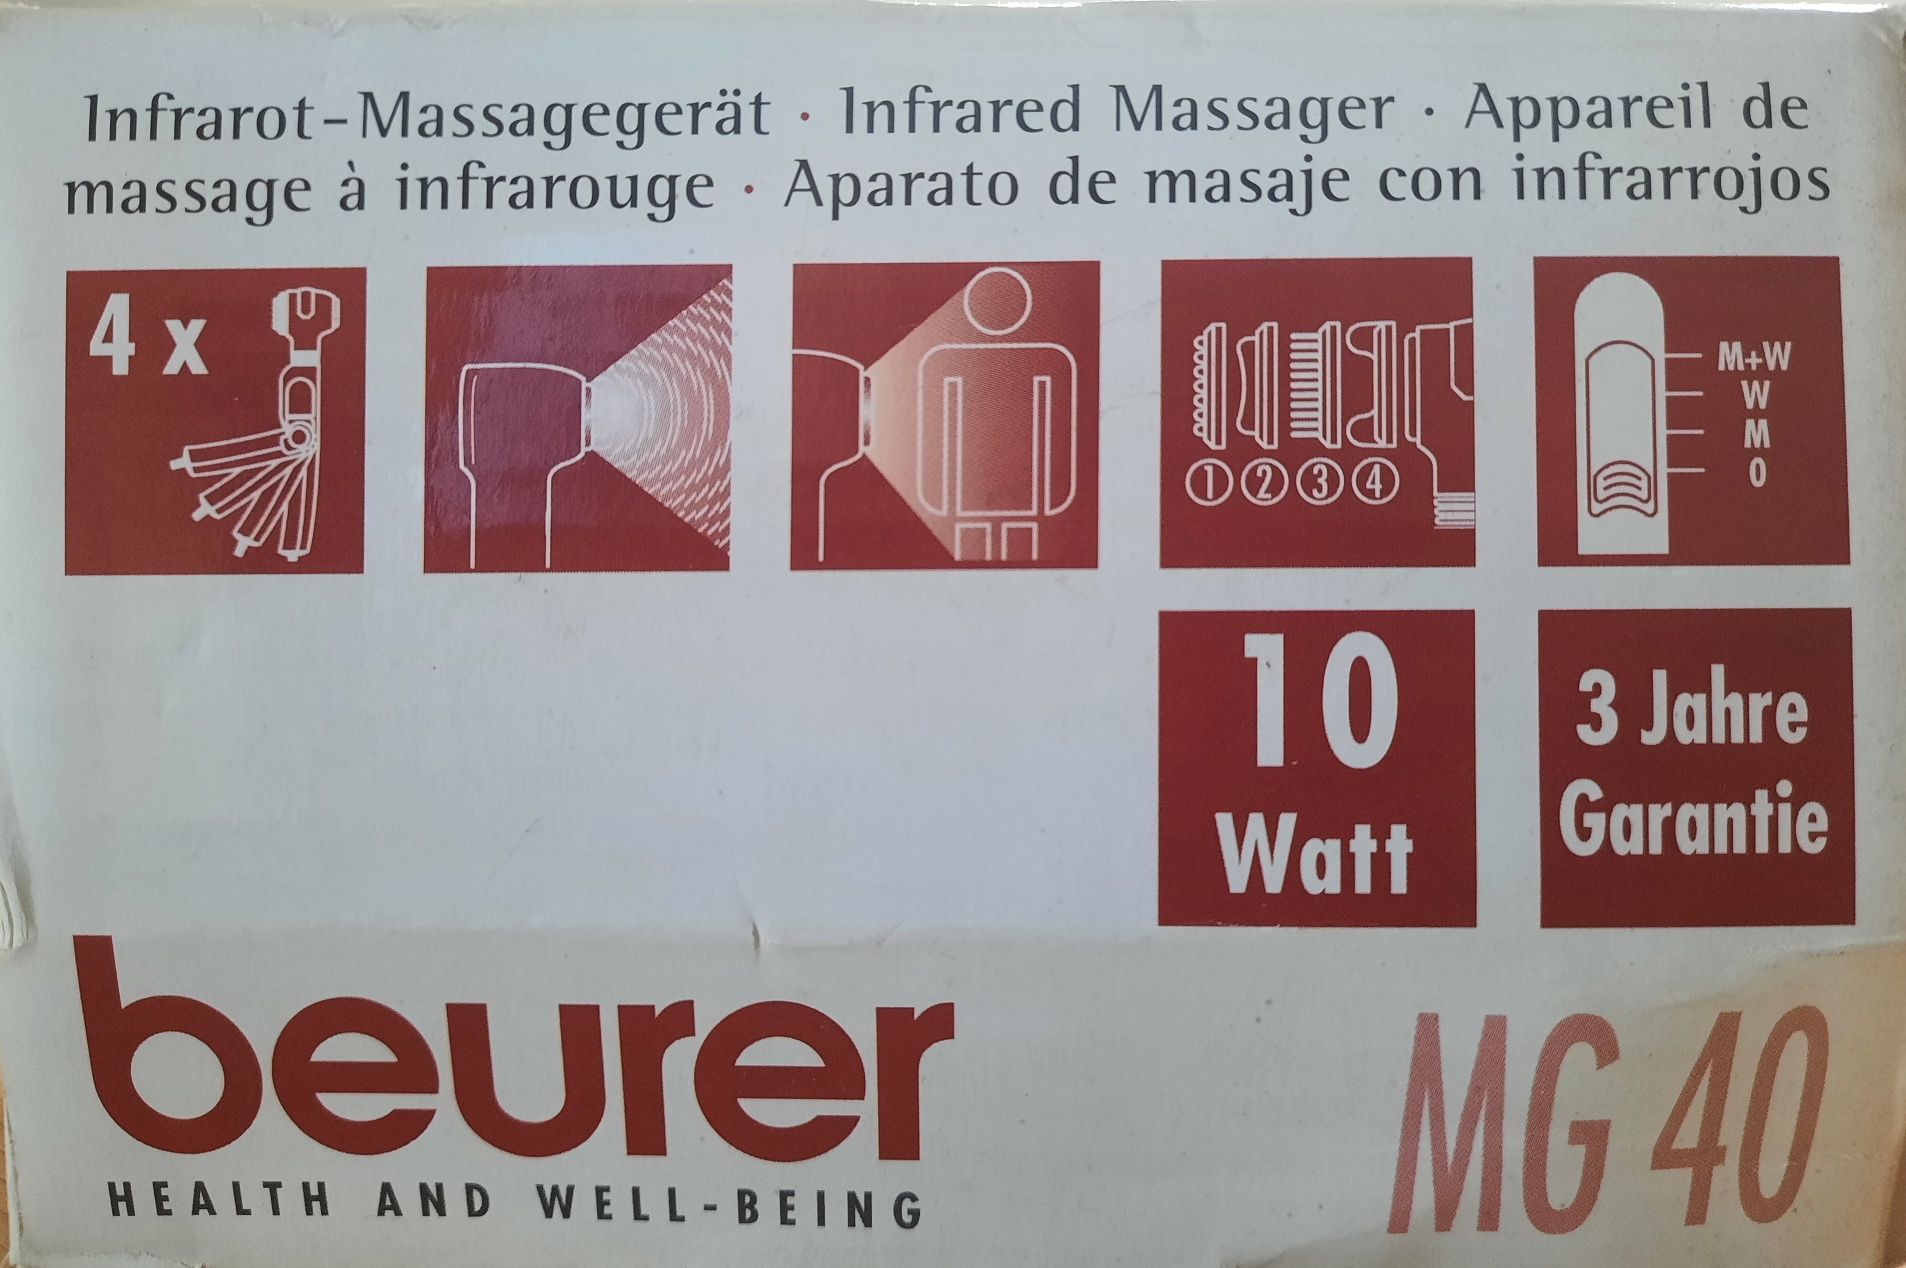 Vand aparat de masaj cu infrarosu BEURER MG 40, alb